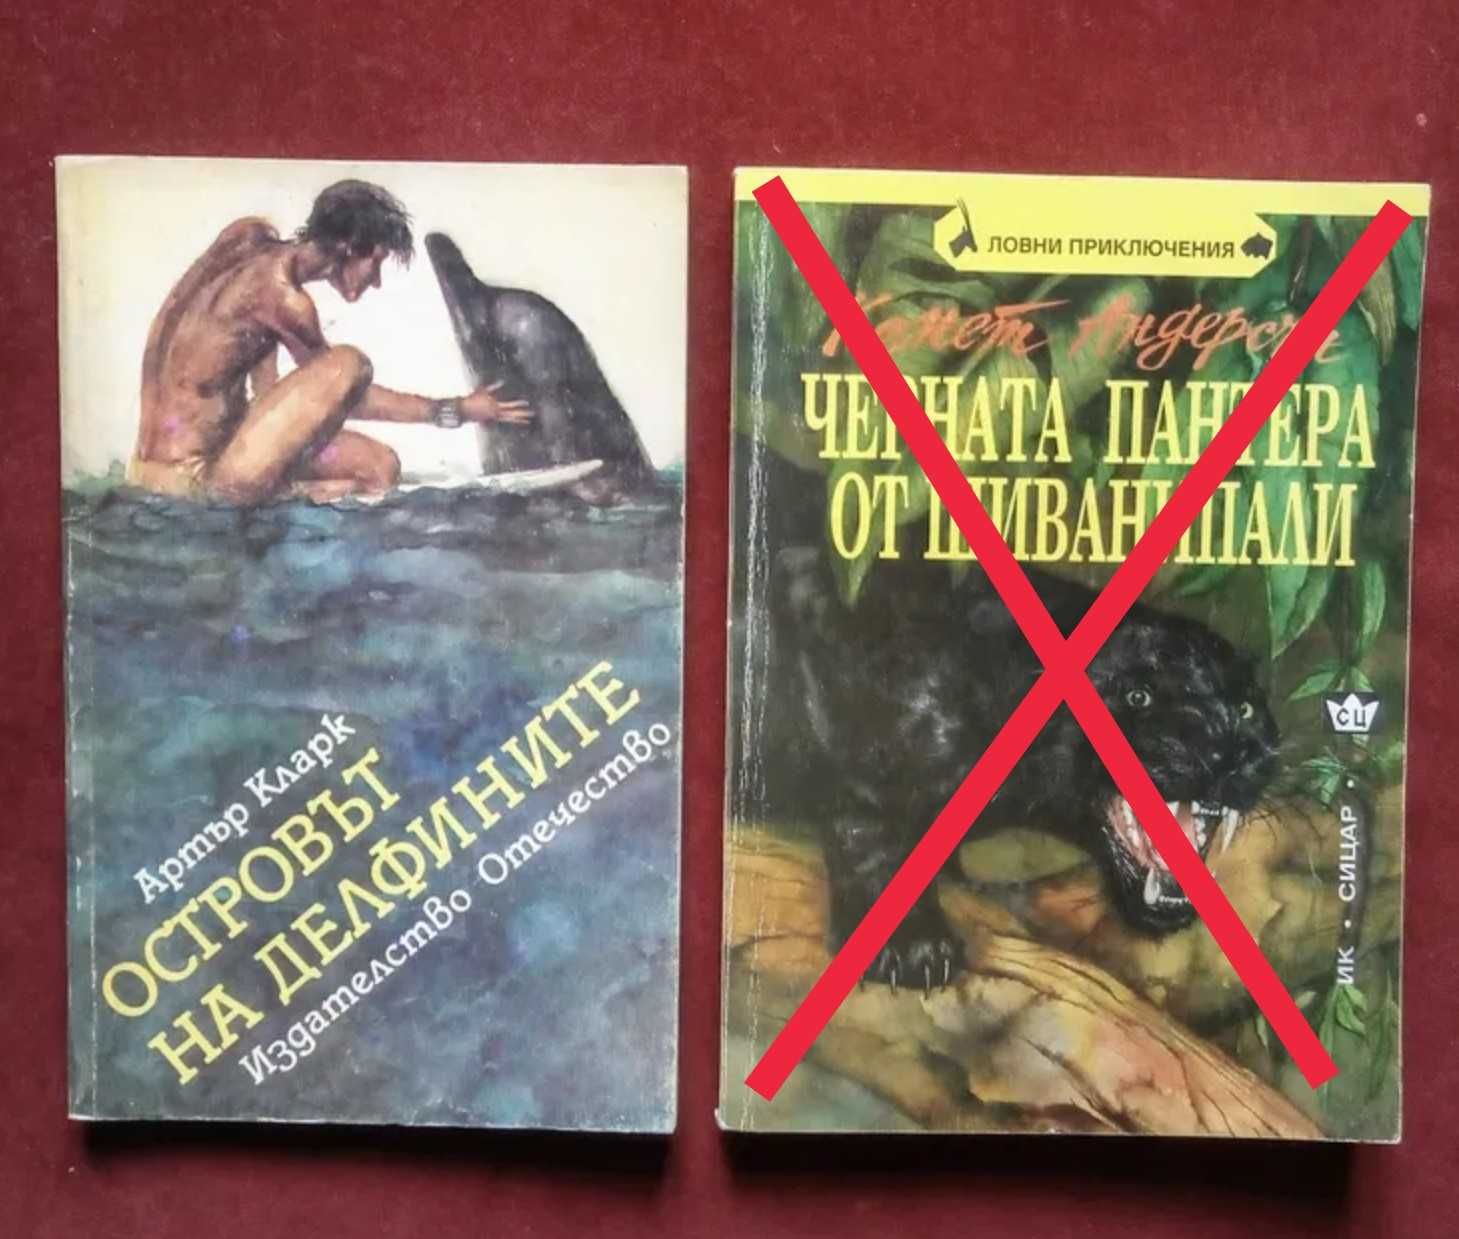 Книги на Емилио Салгари изд МАГ 77 и други